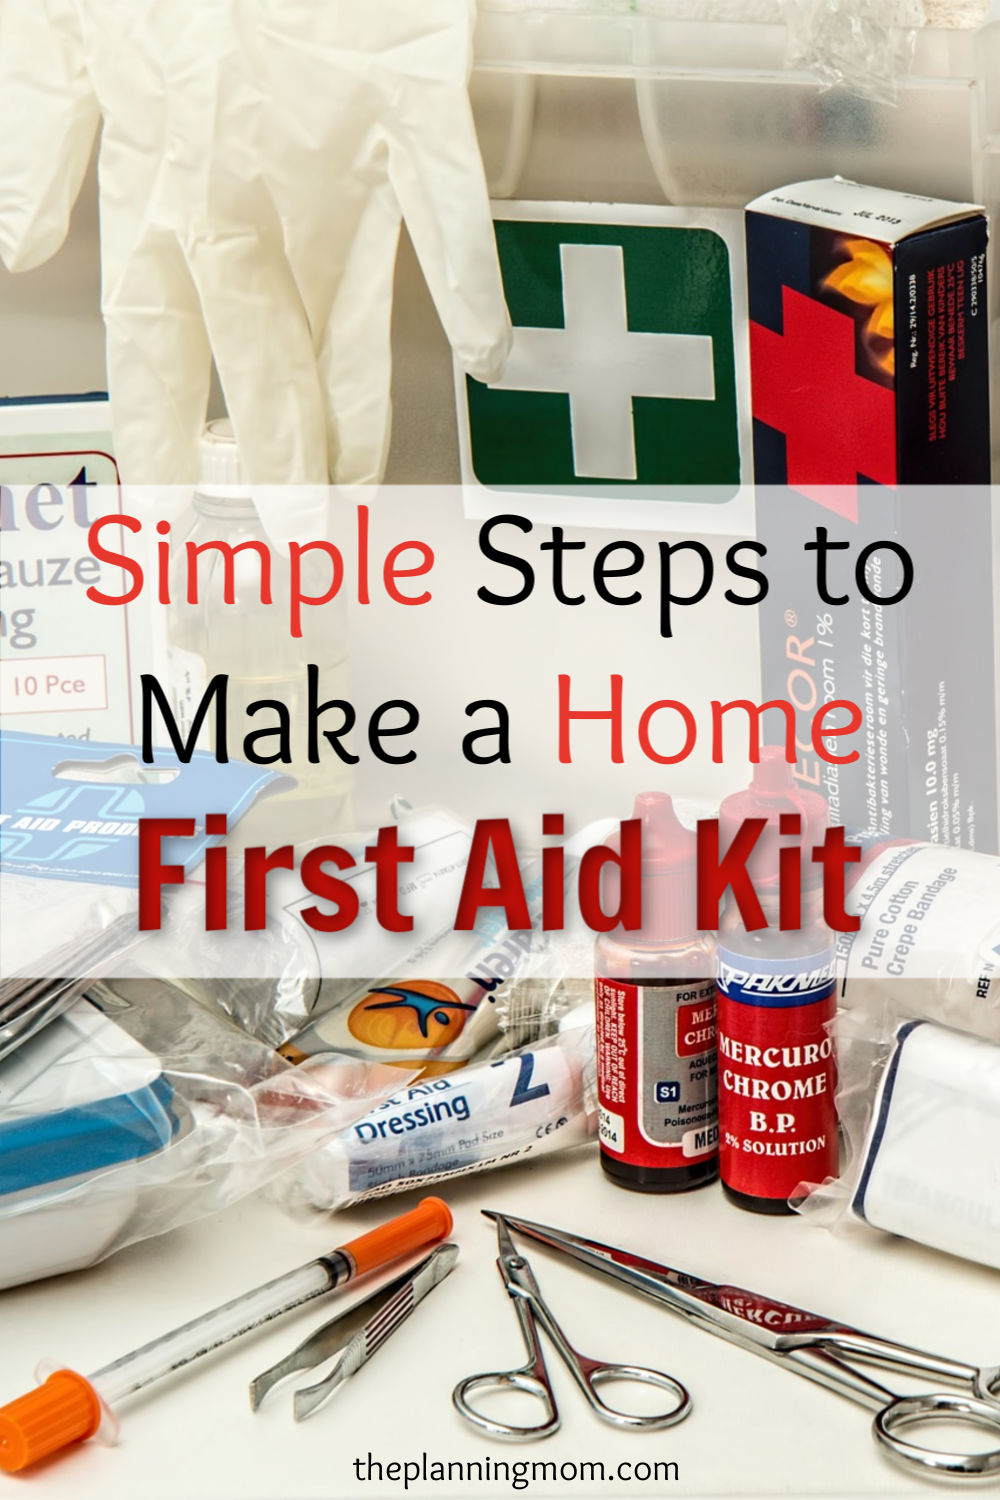 Scissors, first aid kit type, 4.5